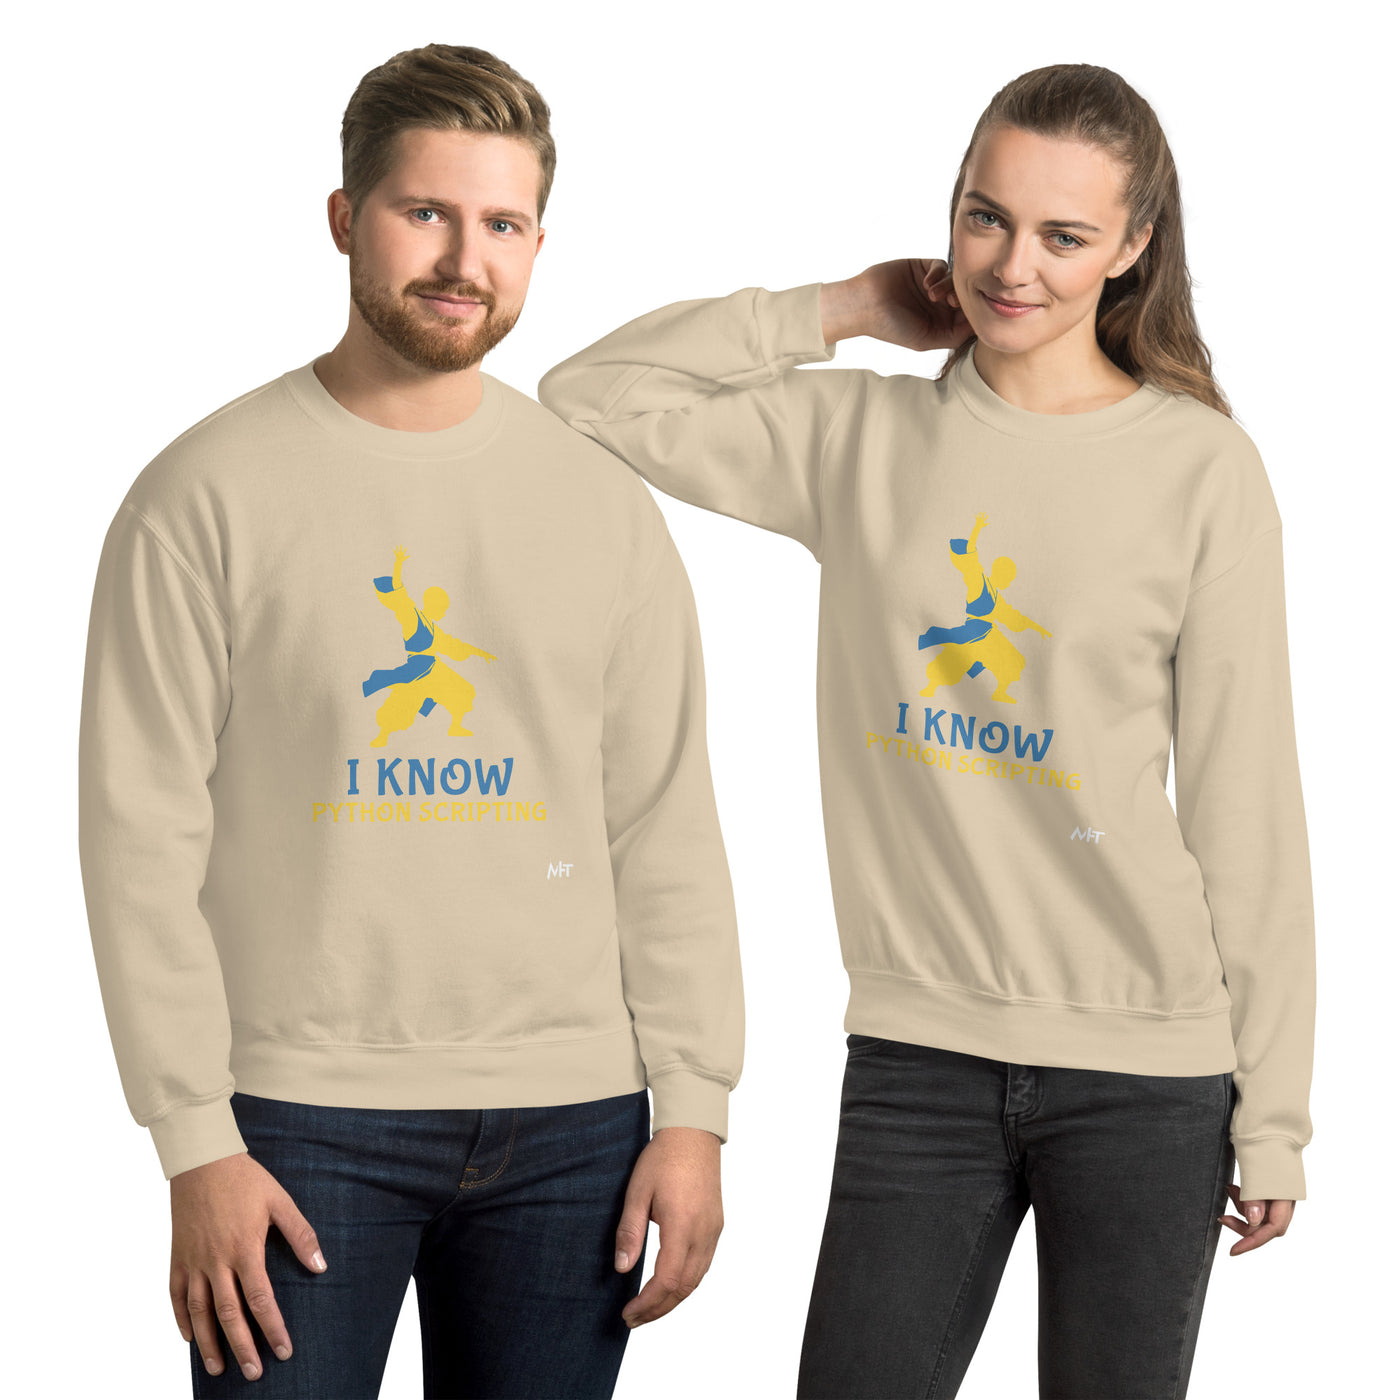 I Know Python Scripting - Unisex Sweatshirt